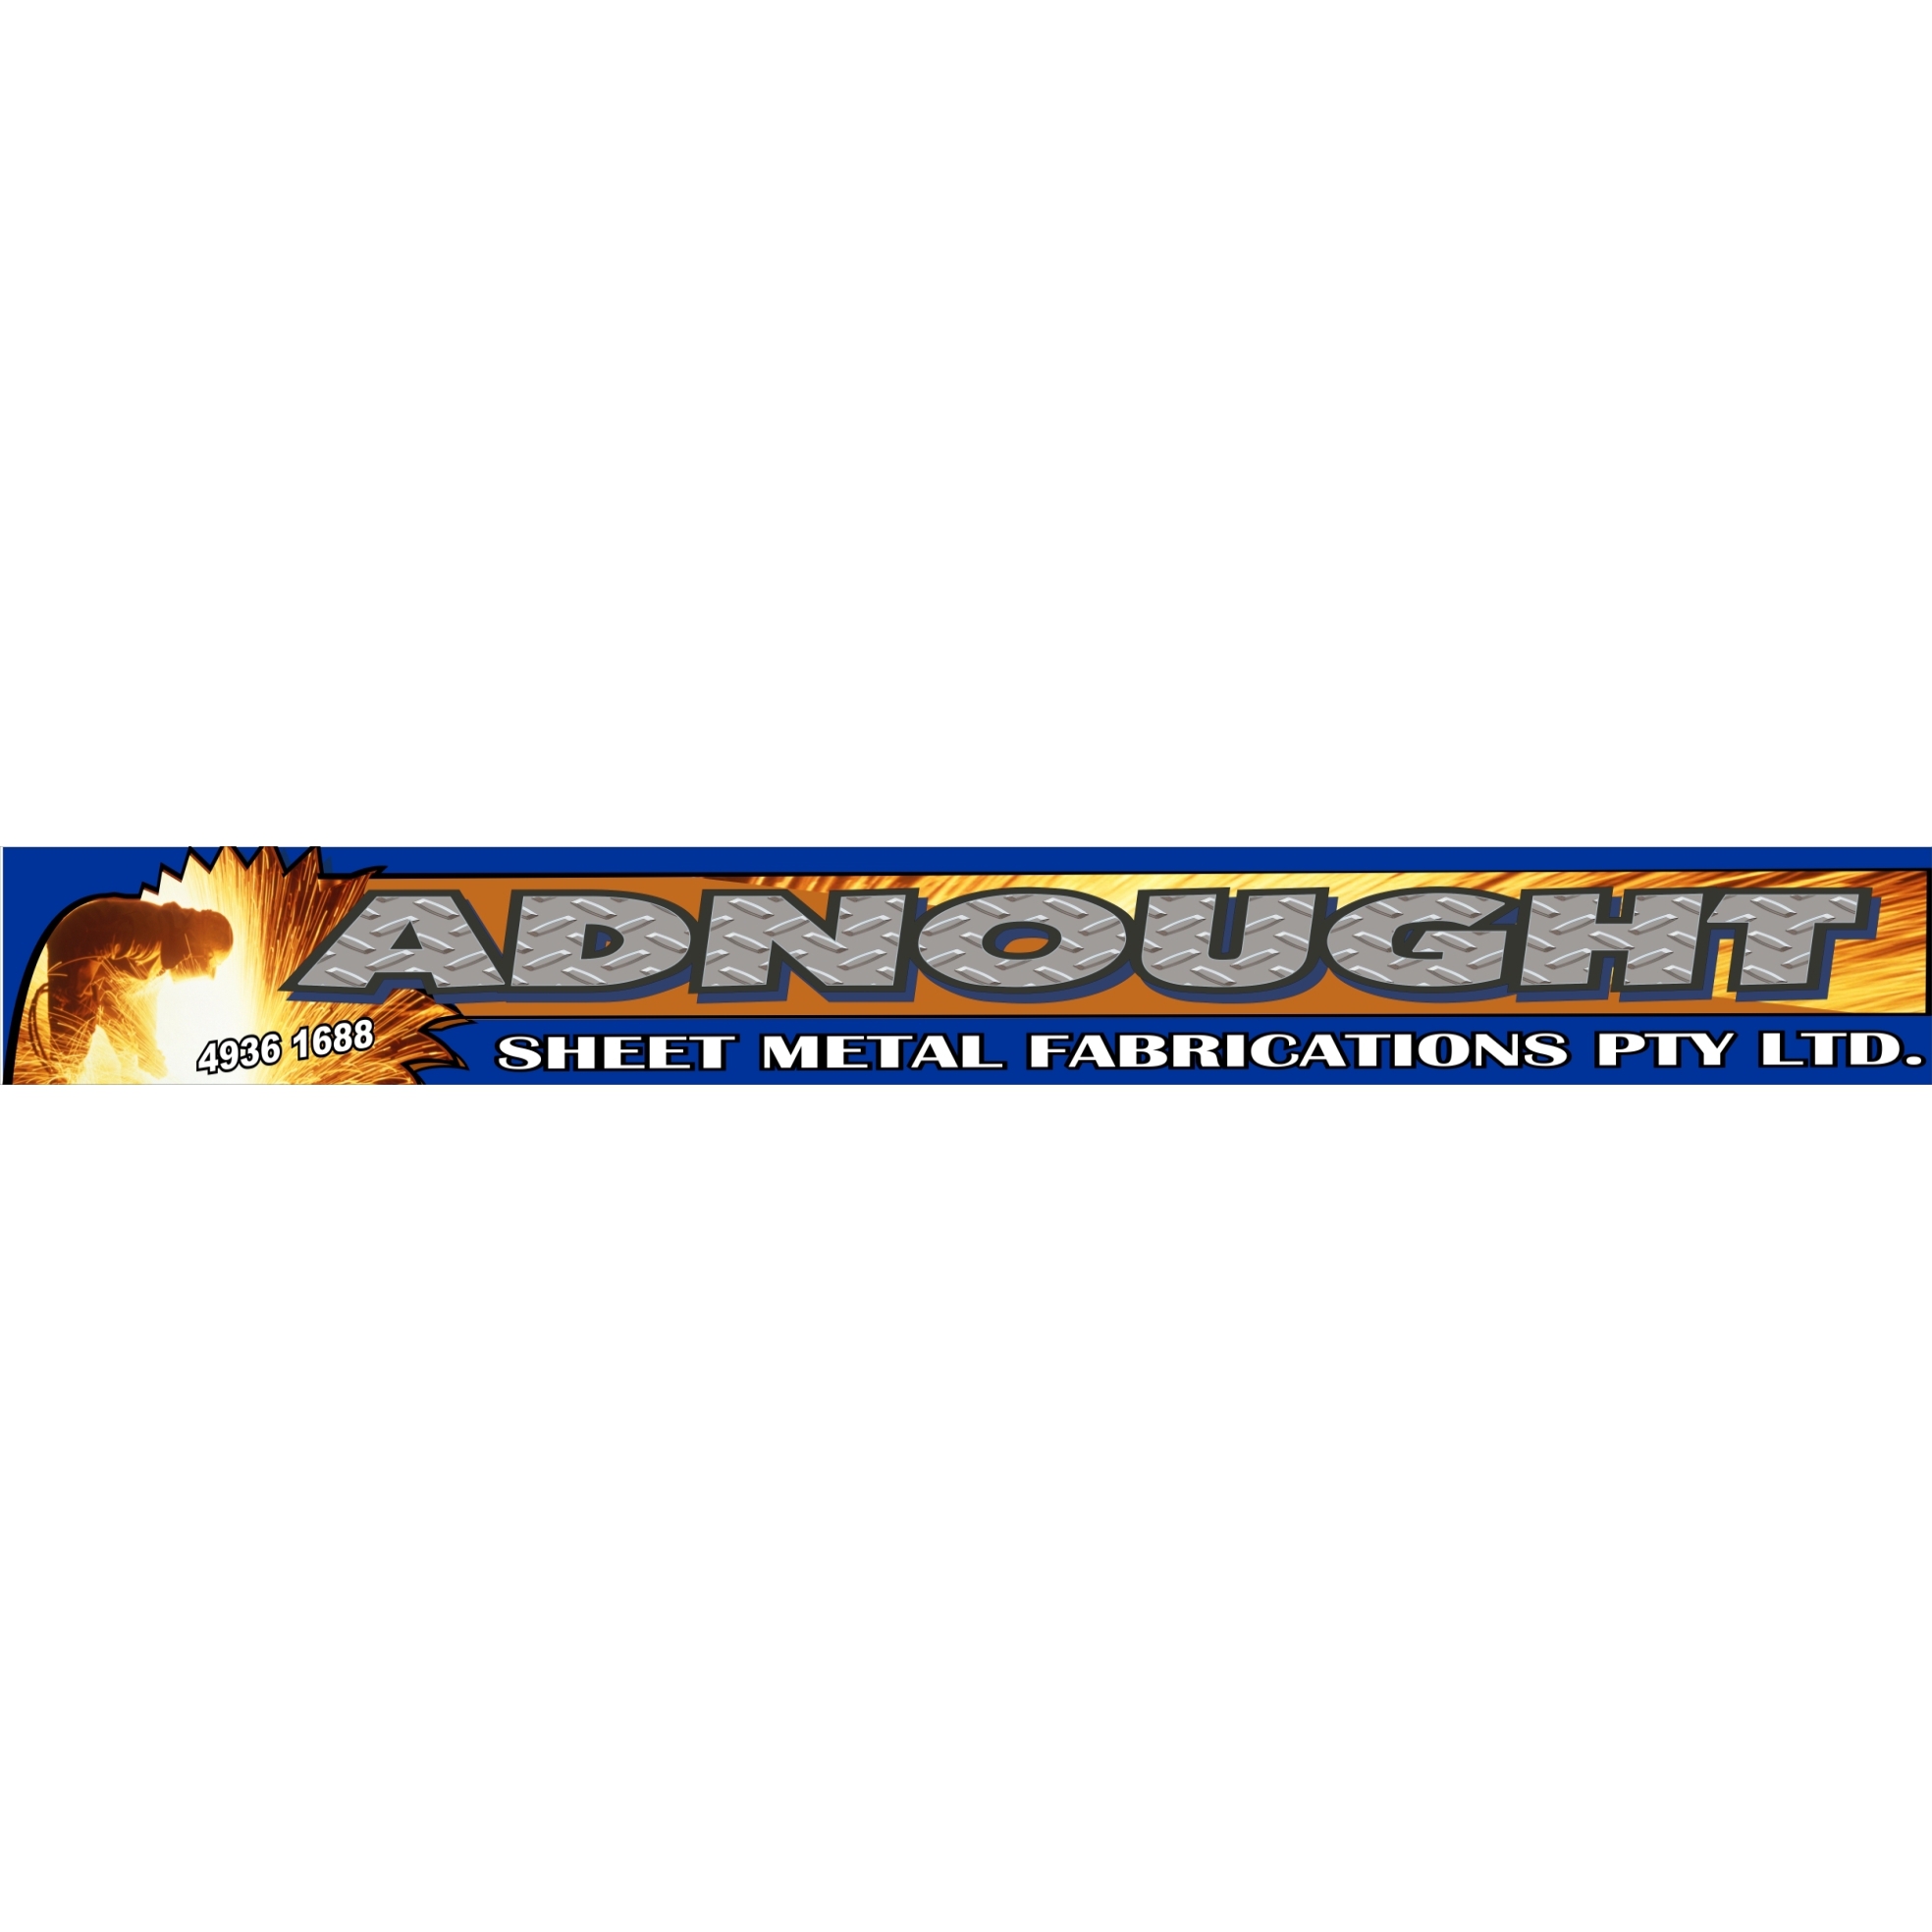 Adnought Sheet Metal Fabrications Pty Ltd - Kawana, QLD 4701 - (07) 4936 1688 | ShowMeLocal.com